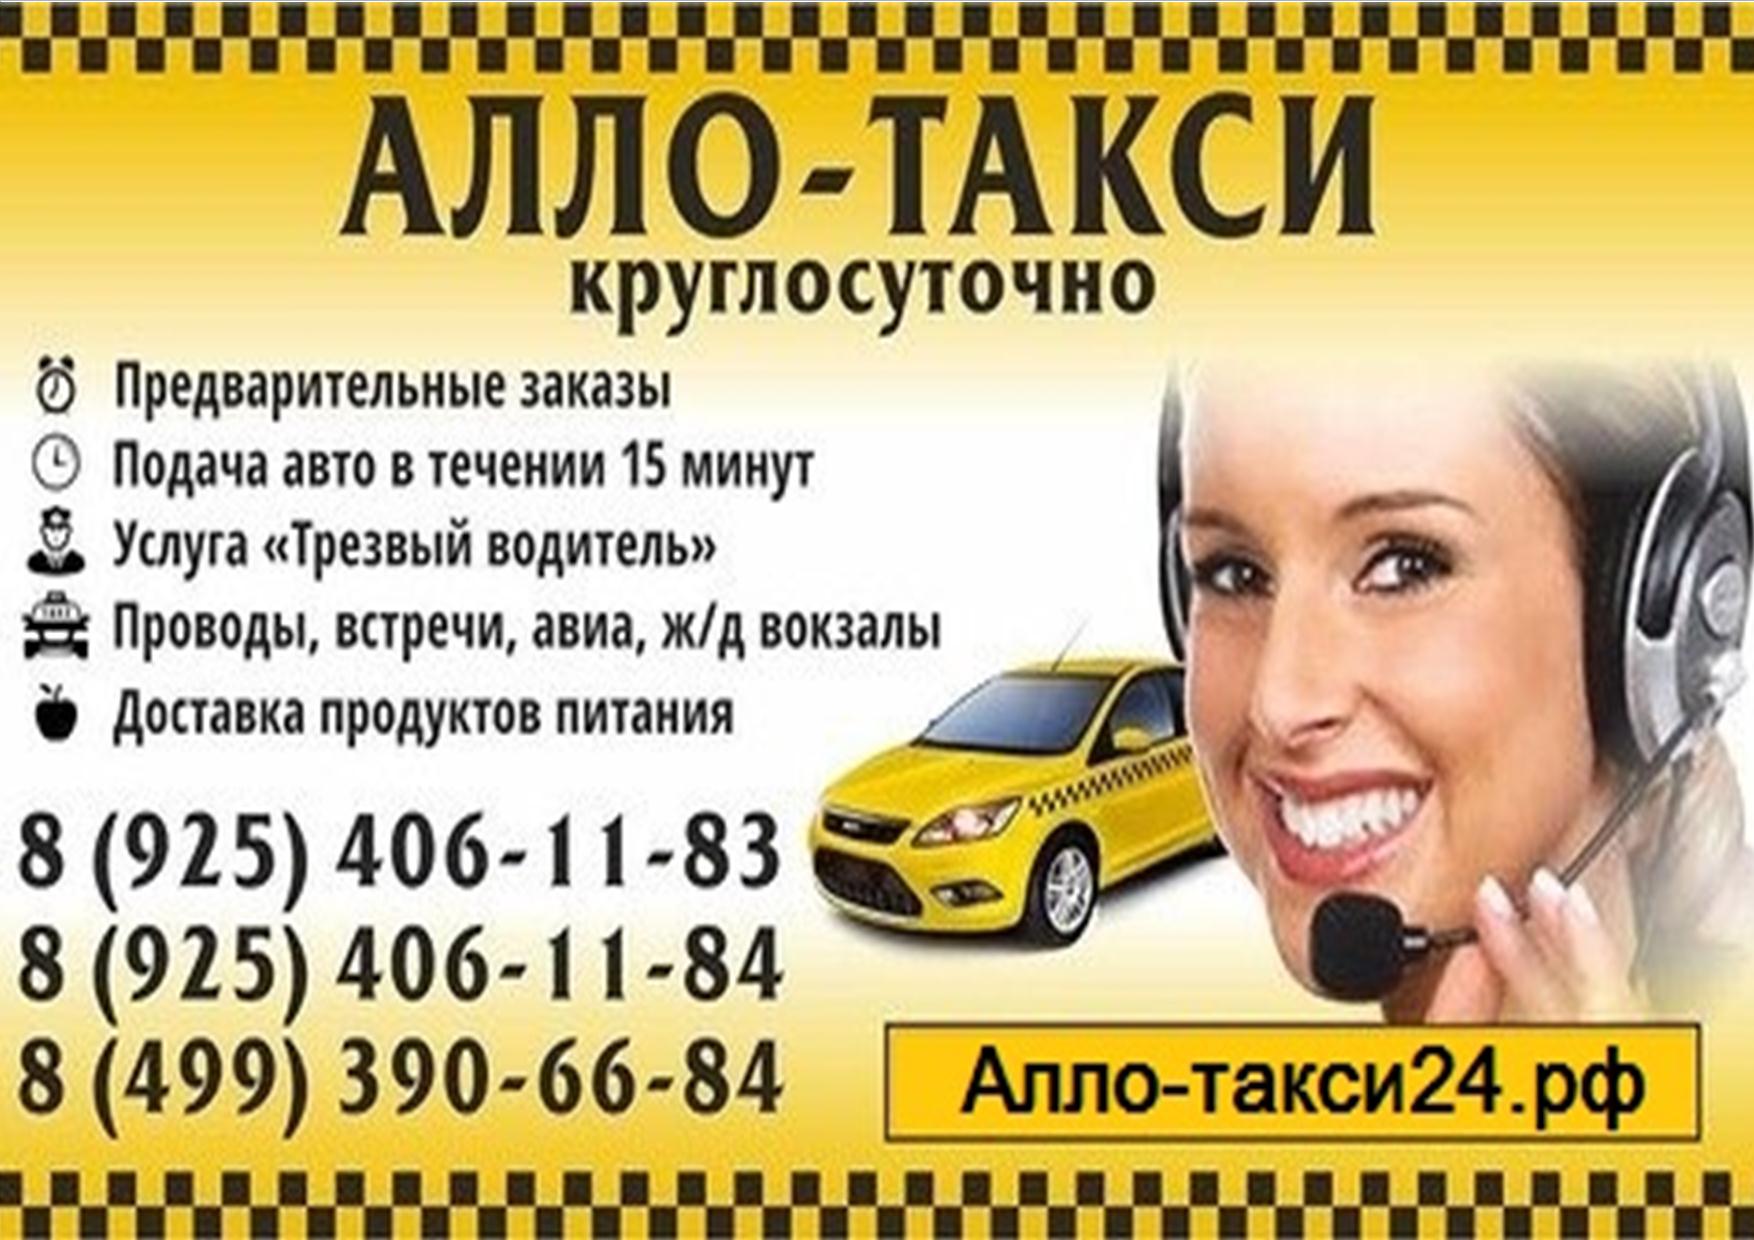 Телефон заказа машины. Реклама такси. Объявление такси. Визитка такси. Таксист реклама.